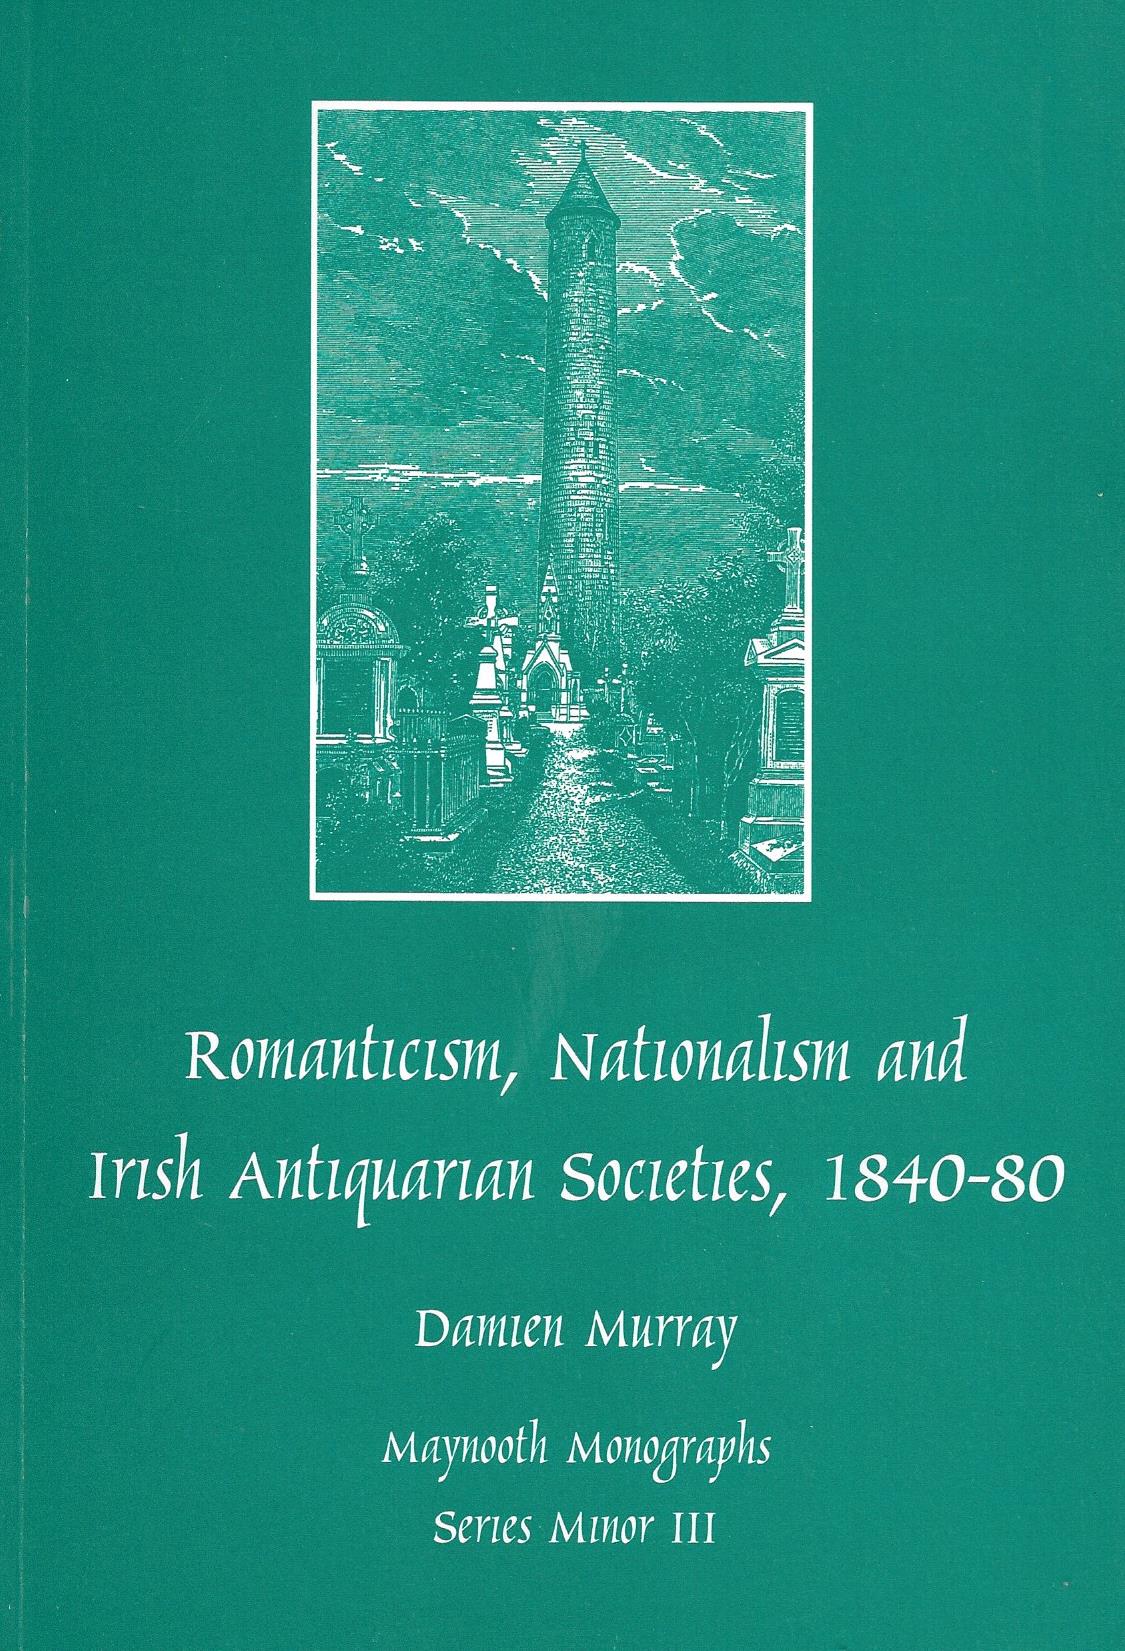 Romanticism, Nationalism and Irish Antiquarian Societies, 1840-80 (Maynooth Monographs Series Minor III)